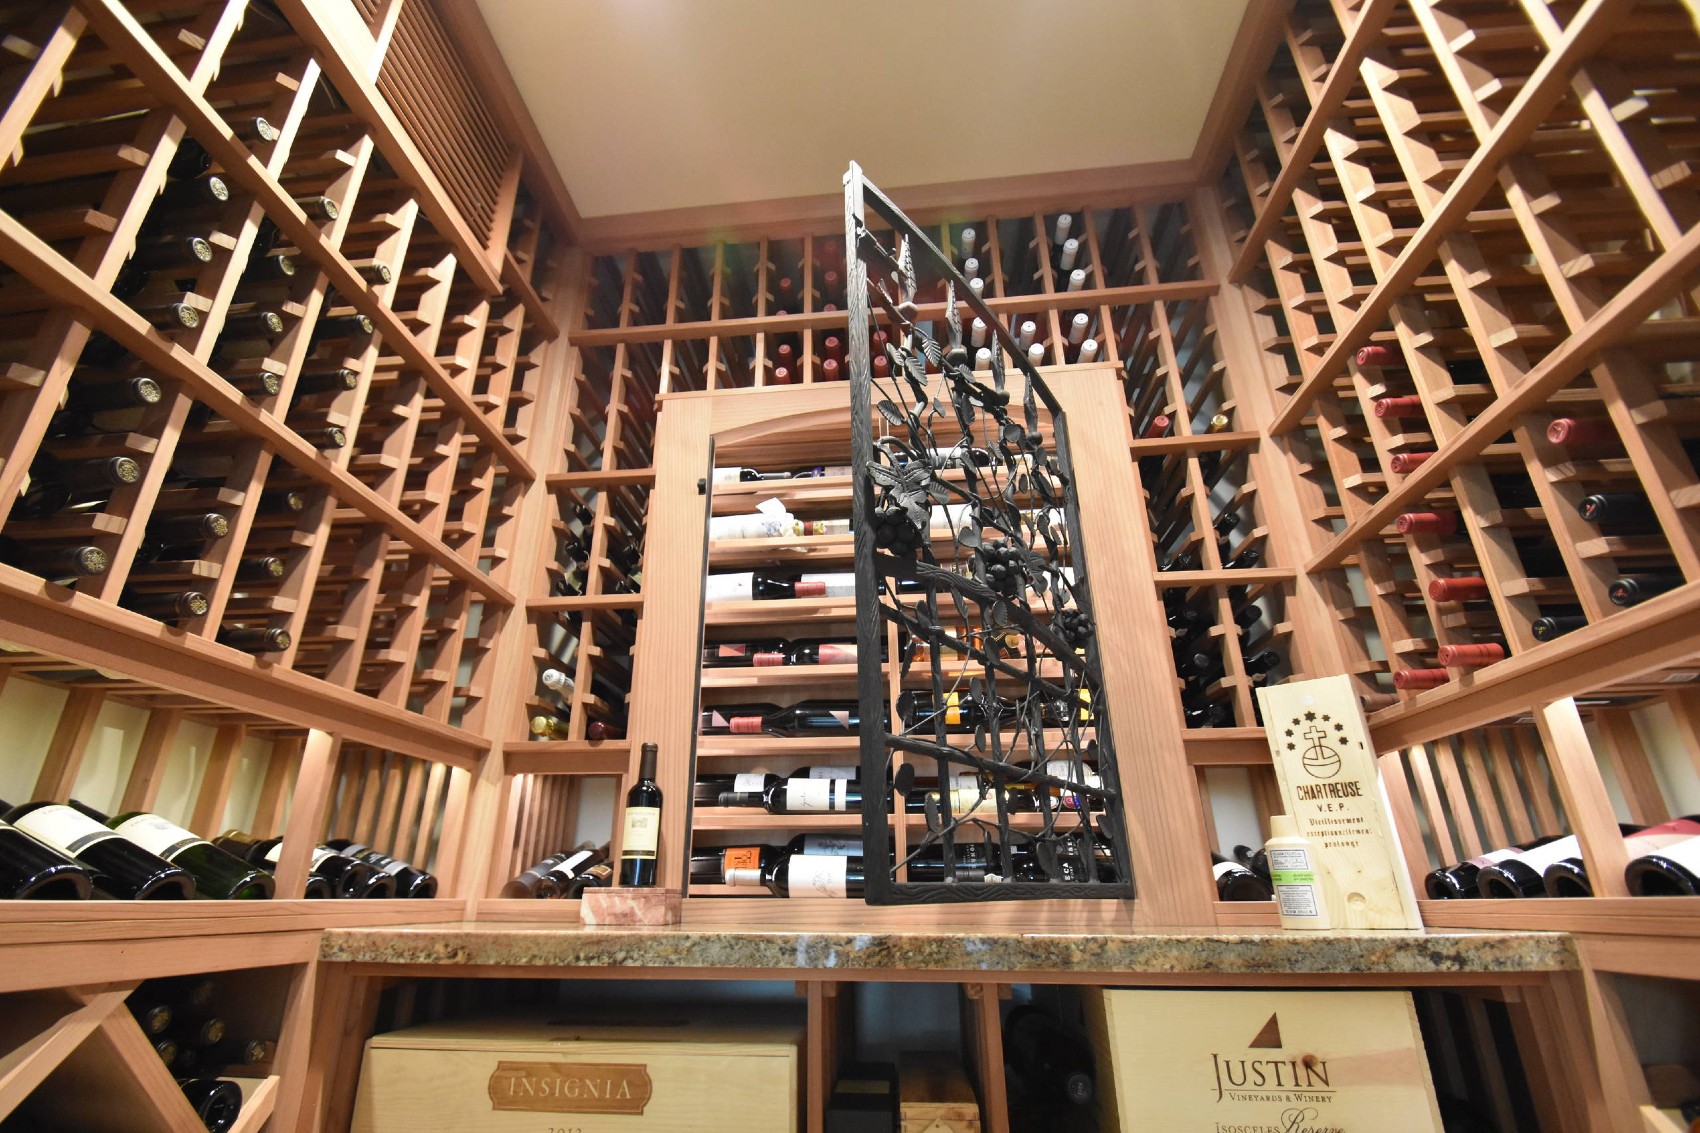 Second view of Laguna Hills Orange County Small Custom Wine Cellar with Wrought Iron Door
